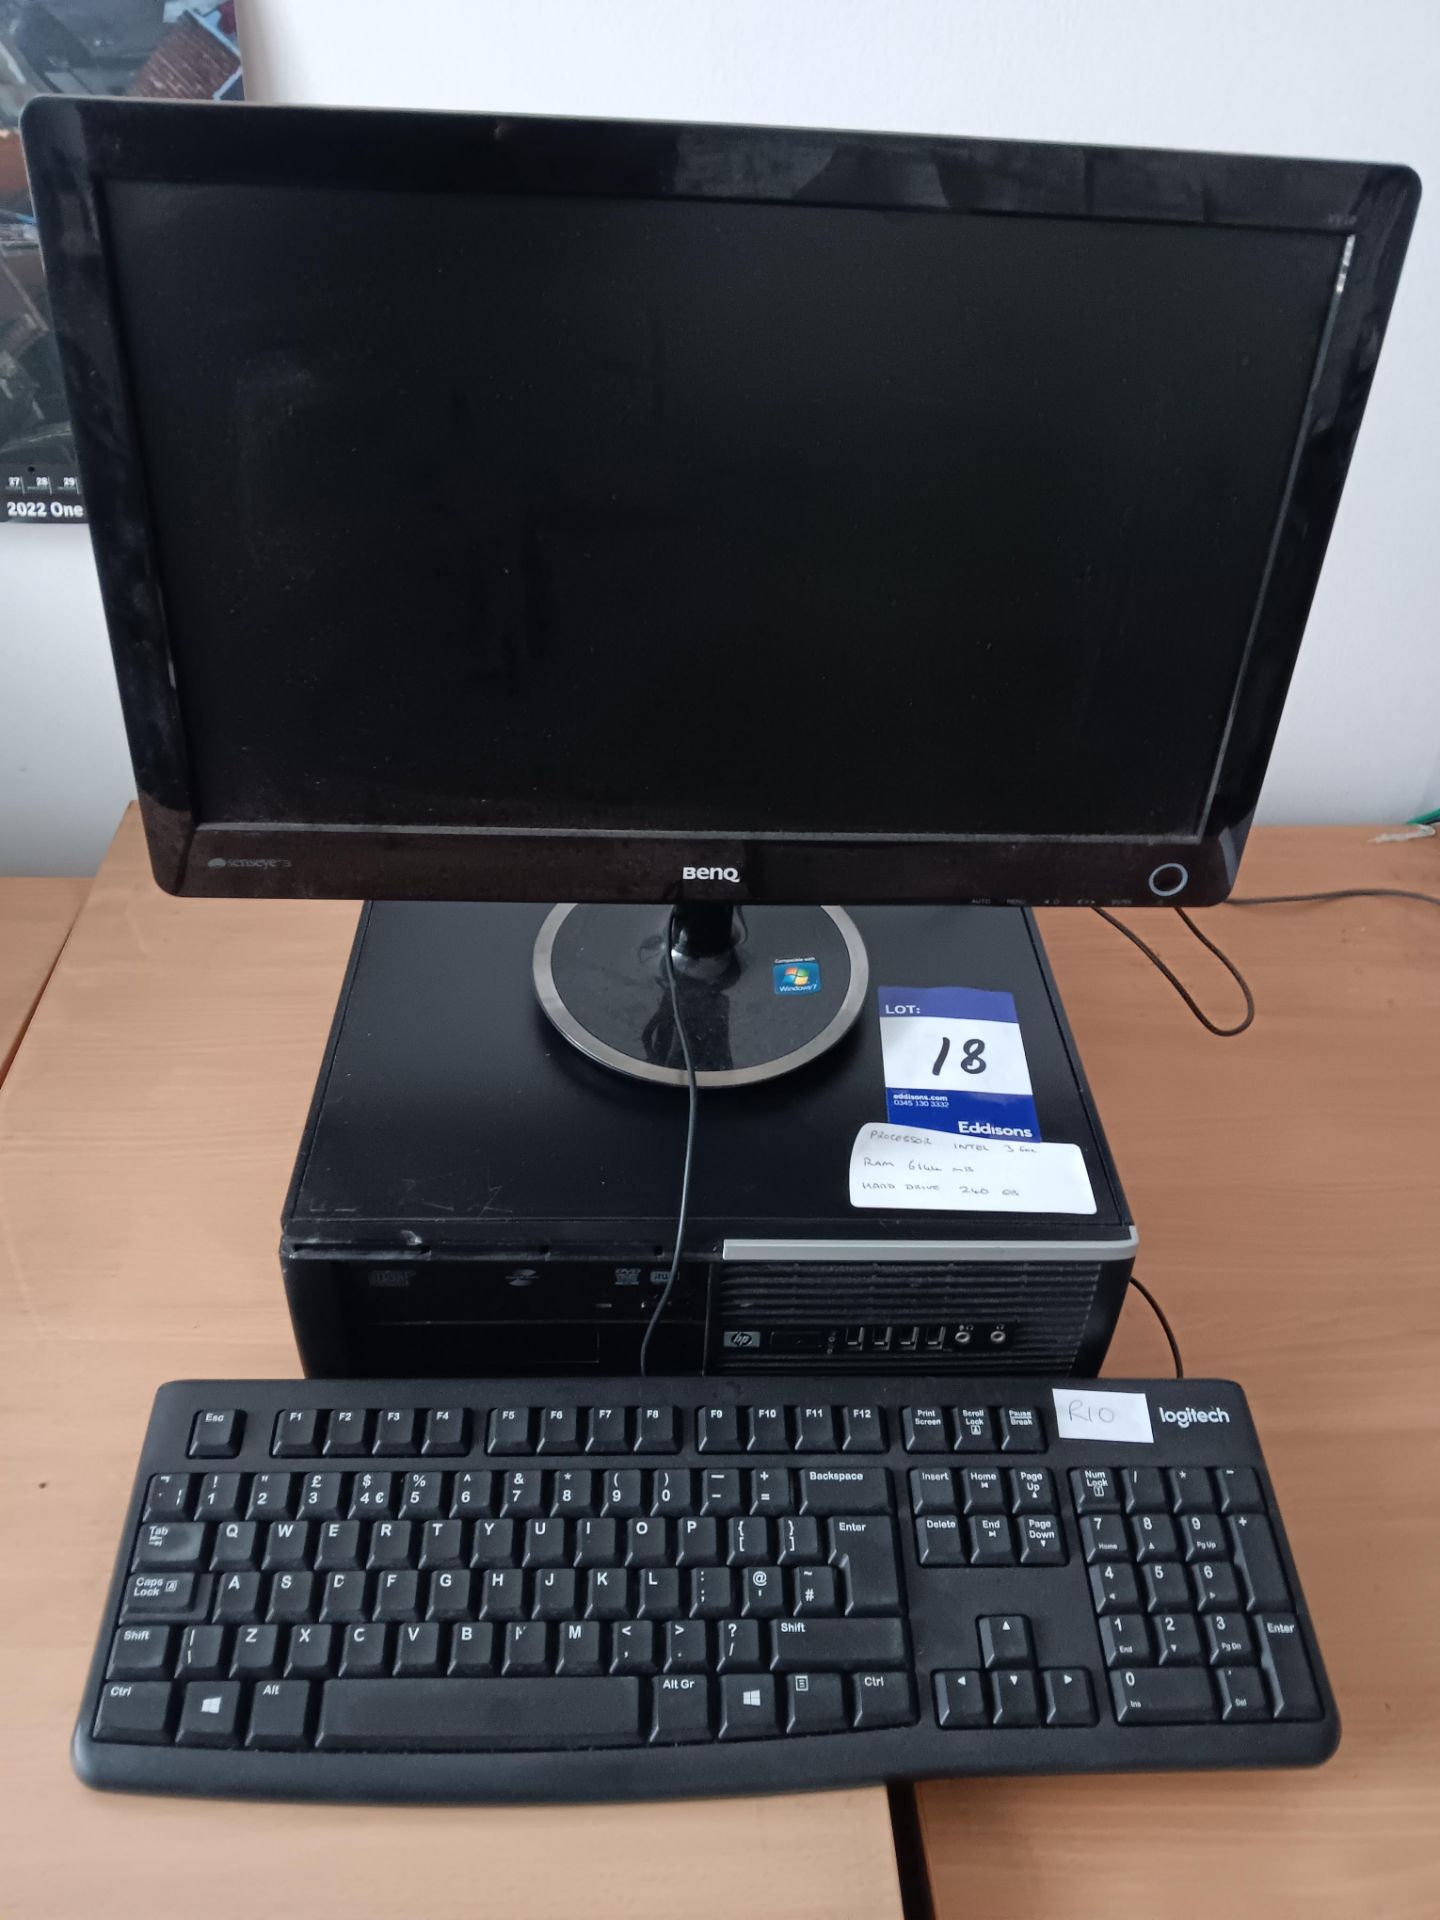 HP Computer with Monitor & Keyboard – 3GHZ Processor, 6144MB Ram & 240GB Hard Drive